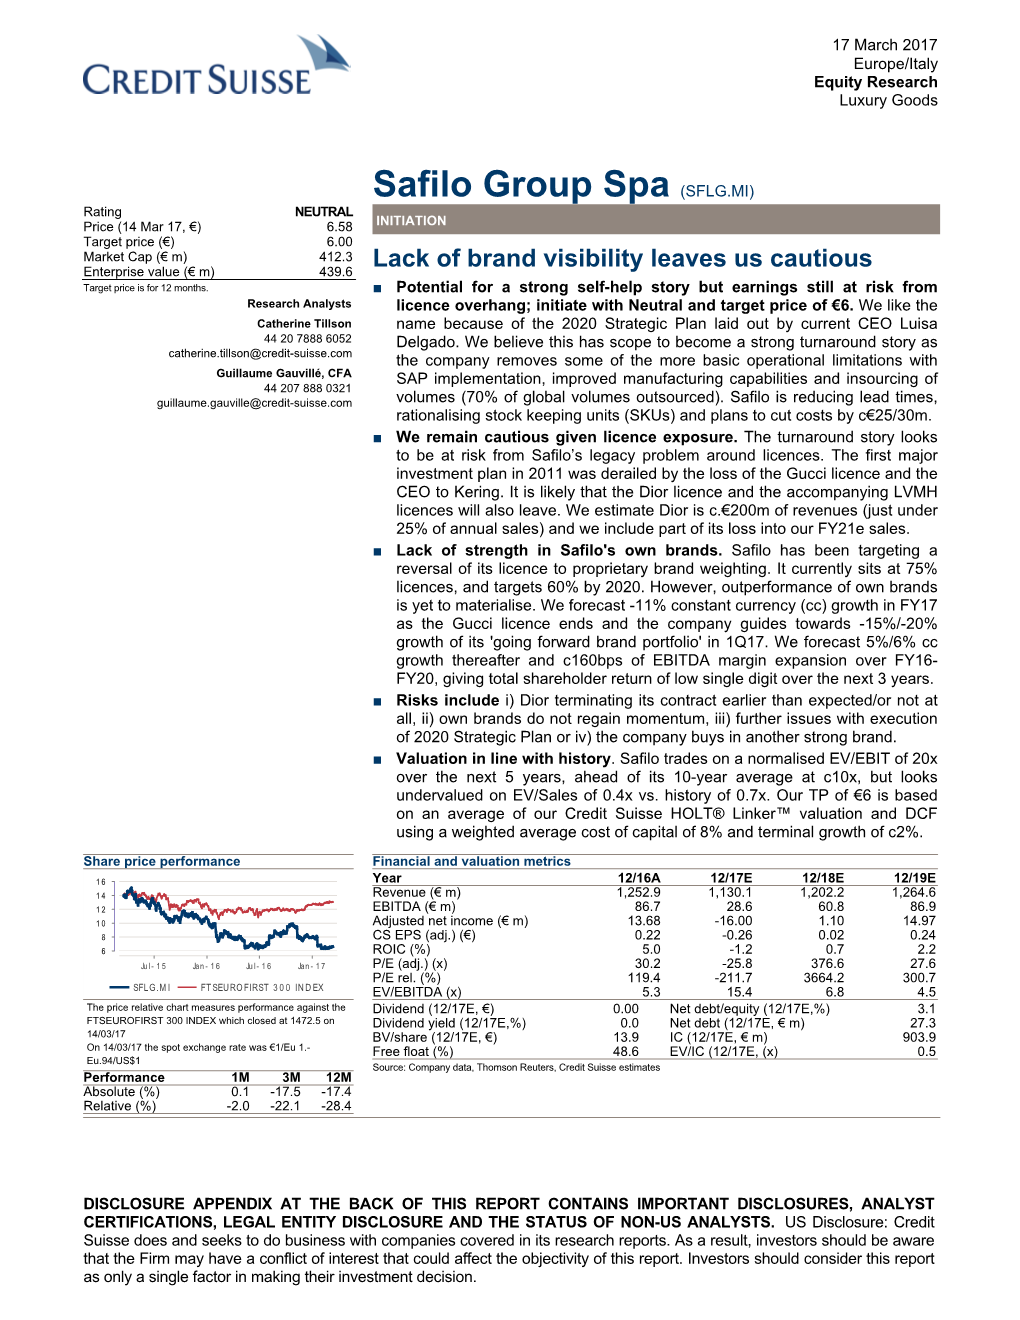 Safilo Group Spa (SFLG.MI)